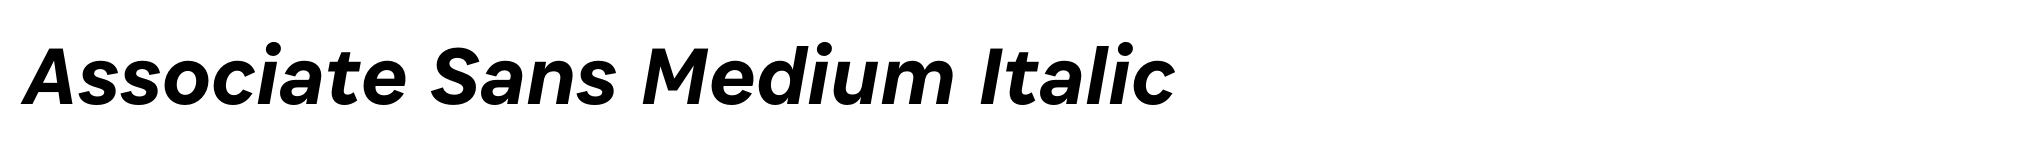 Associate Sans Medium Italic image